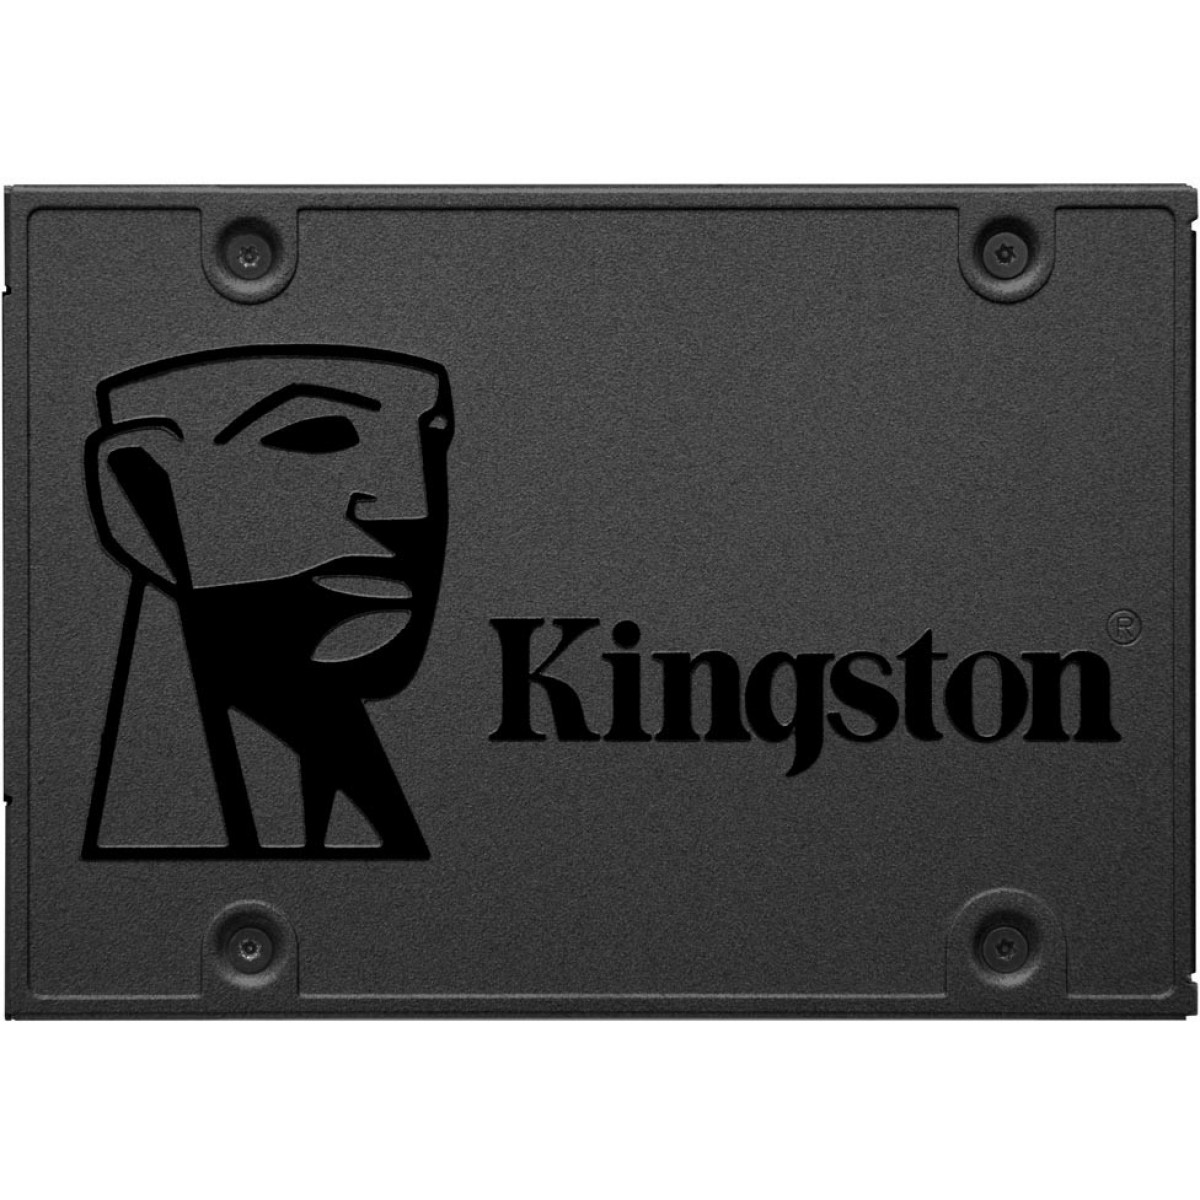 SSD Kingston A400, 240GB, Sata III, Leitura 500MBs Gravação 350MBs, SA400S37/240G